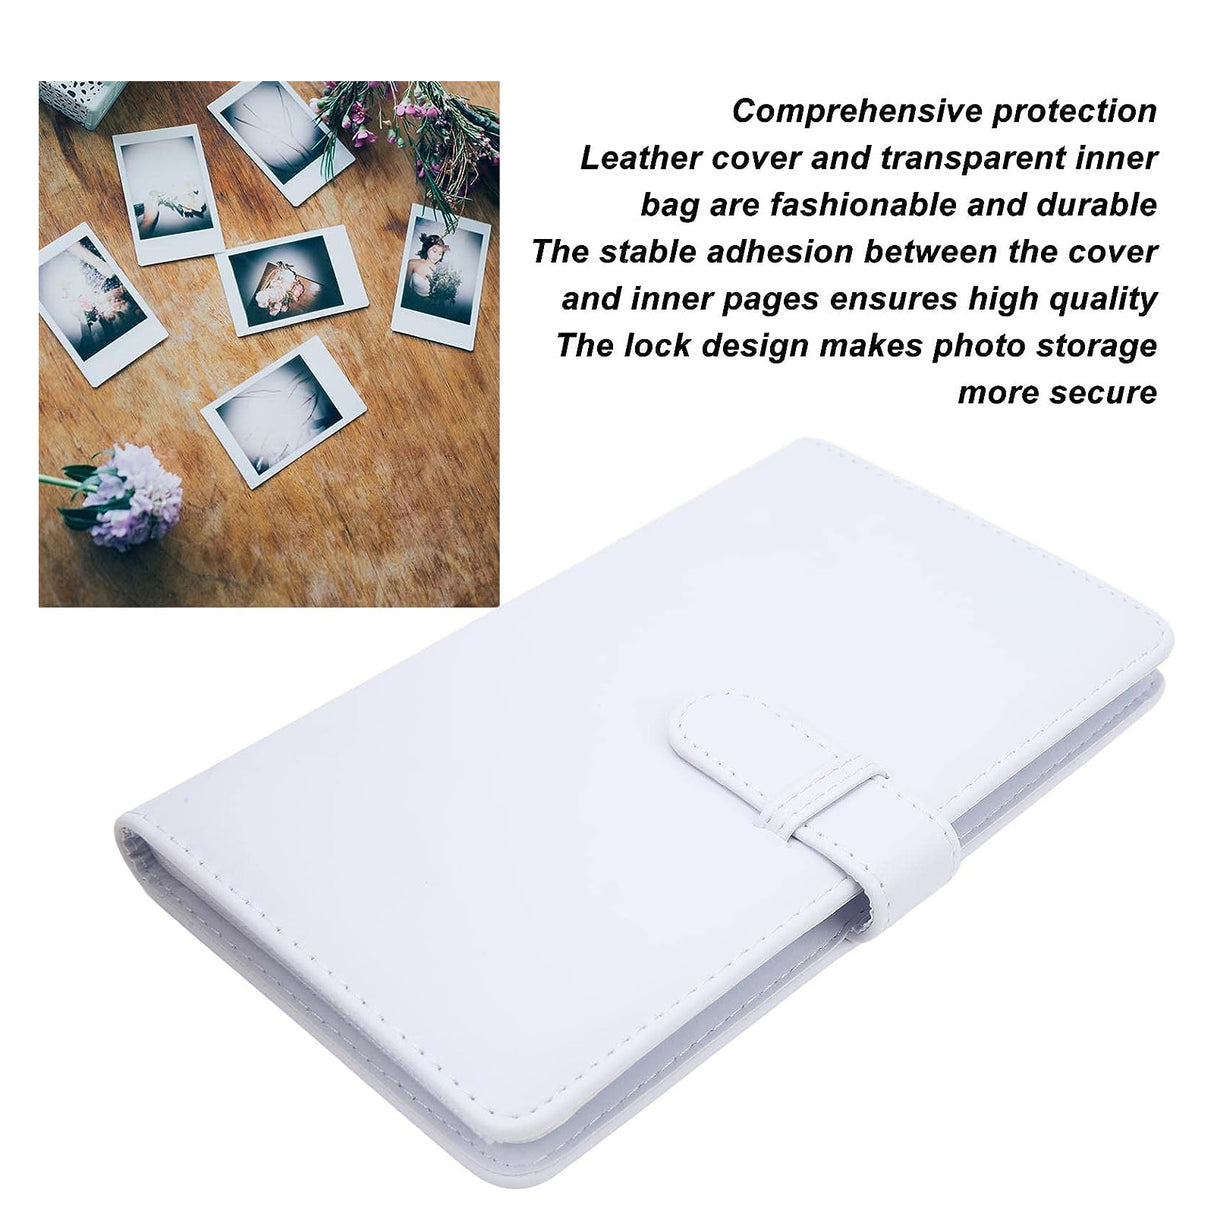 Zikkon Instax Mini Compatible 108 sheet Album for Fujifilm Instax Mini Film Clay White